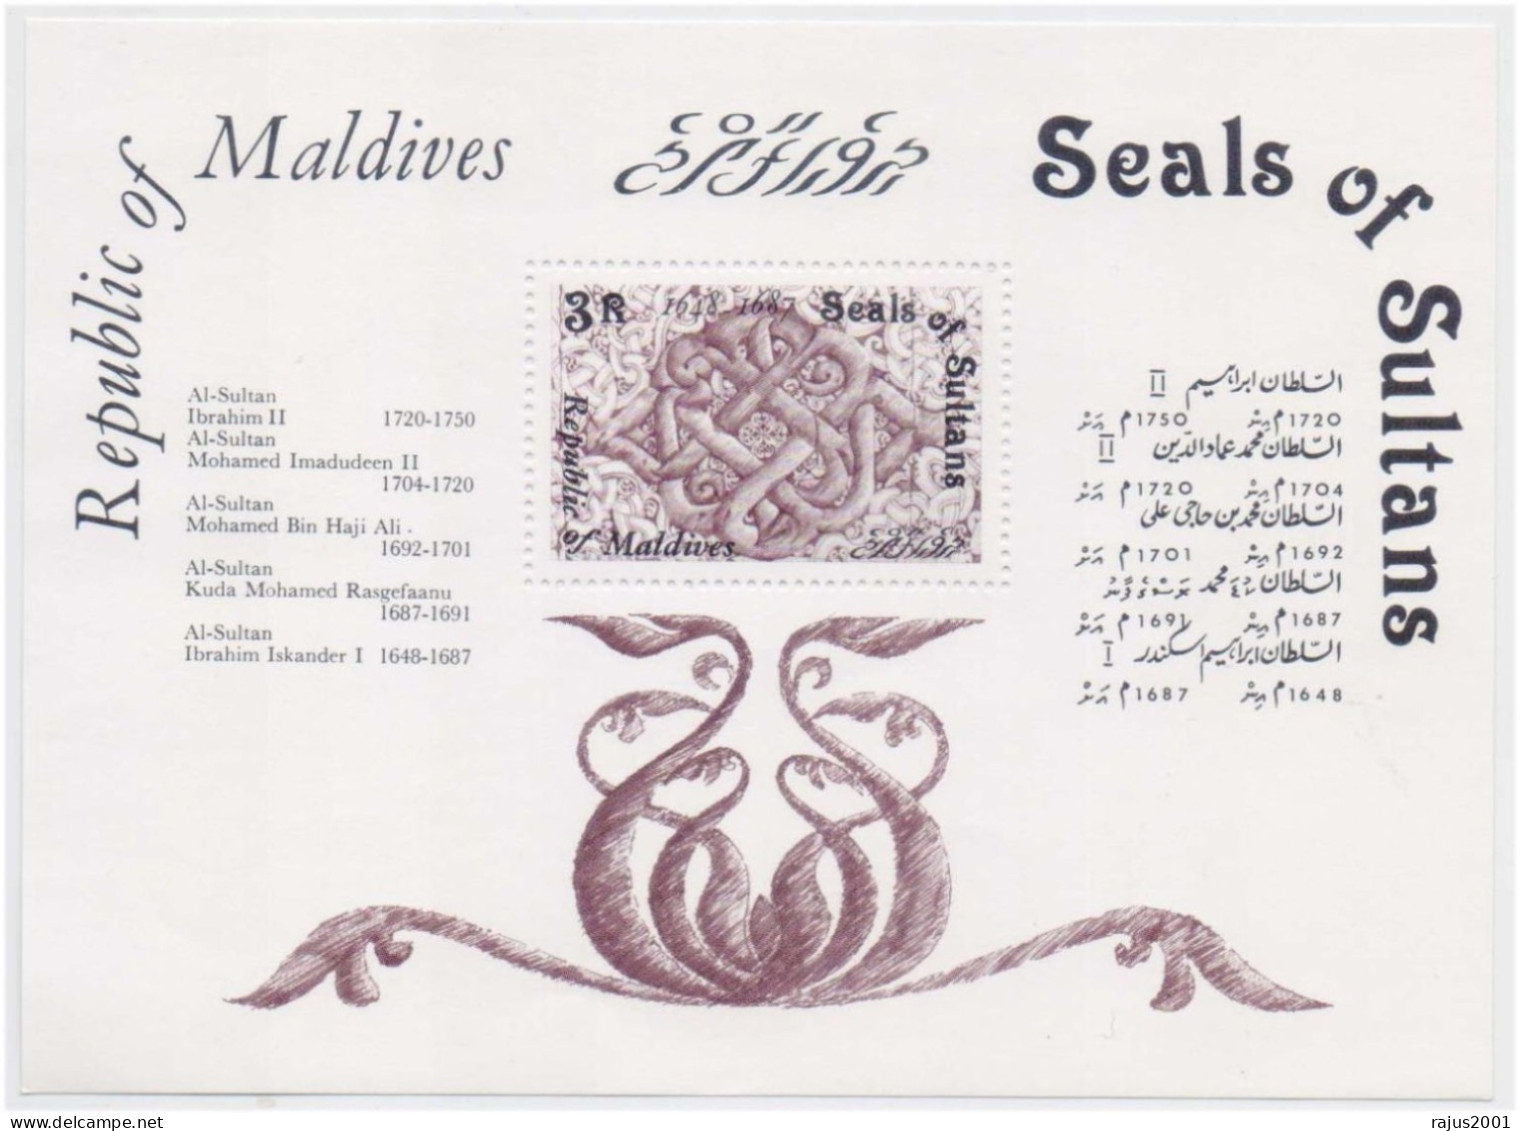 Seal, Seals Of Sultan, Al Sultan Ibrahim, Mohammad Bin Haji Ali, Arabic Calligraphy, Art, Islam Islamic MS MNH MALDIVES - Islam